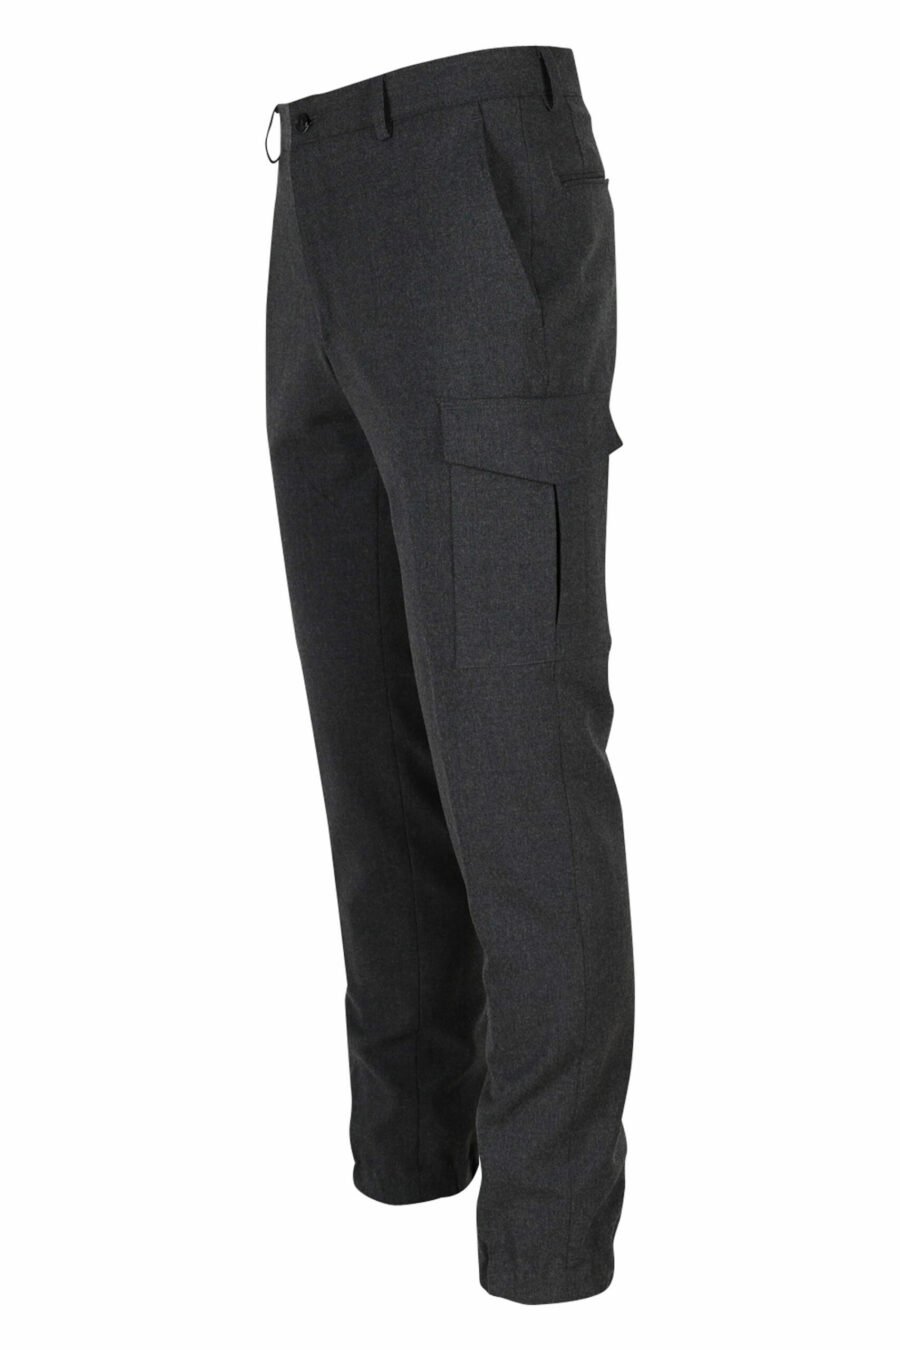 Pantalón de traje gris - 4062226397018 13 scaled